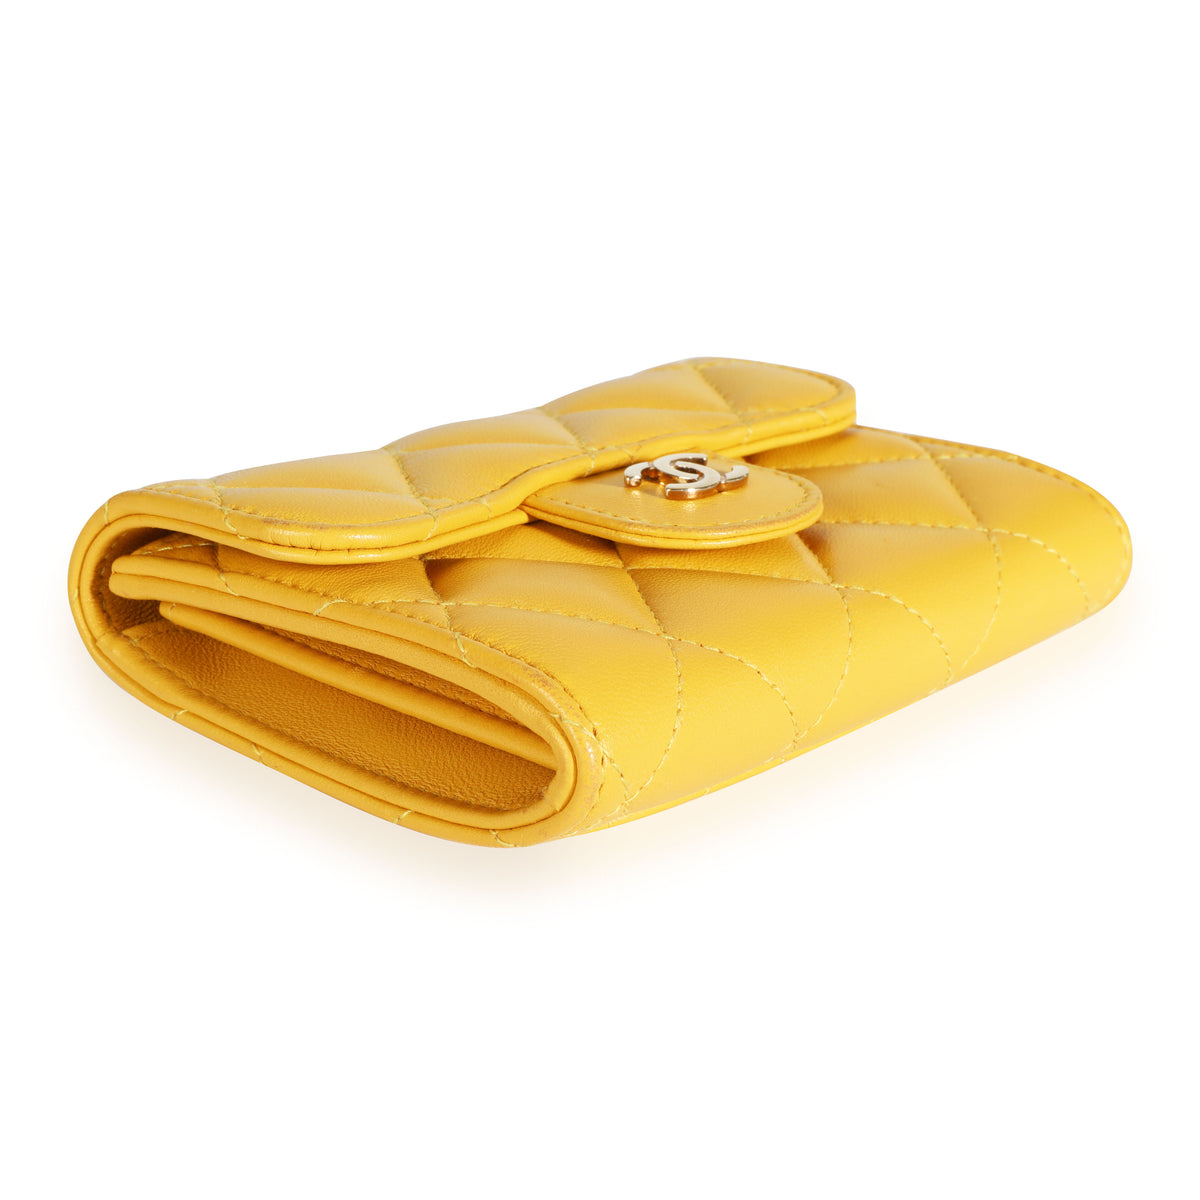 Yellow Metallic Quilted Lambskin Long Flap Wallet